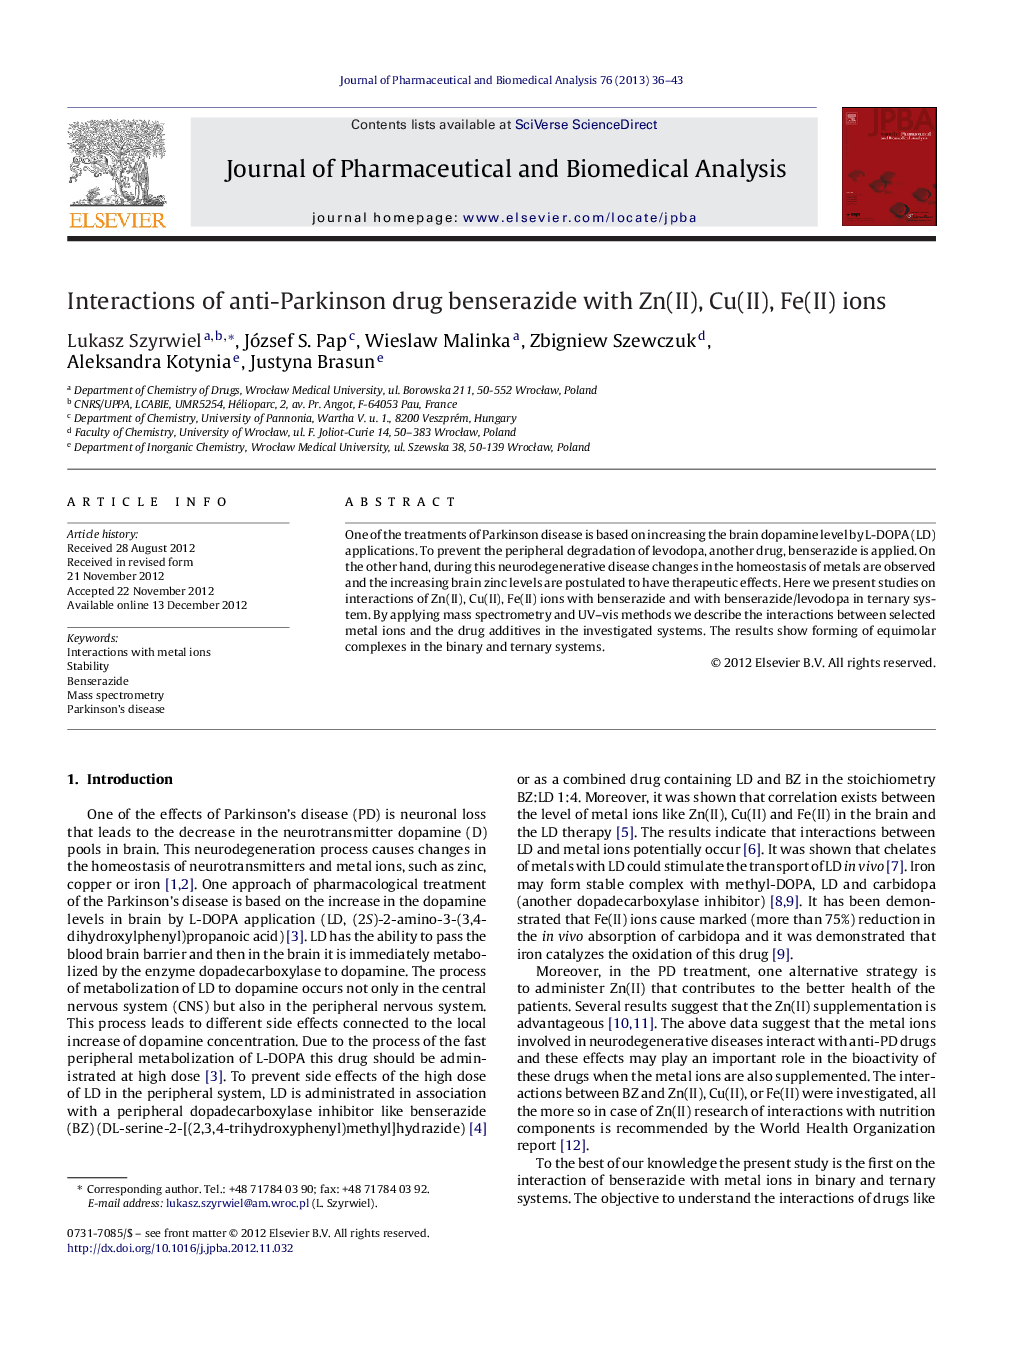 Interactions of anti-Parkinson drug benserazide with Zn(II), Cu(II), Fe(II) ions